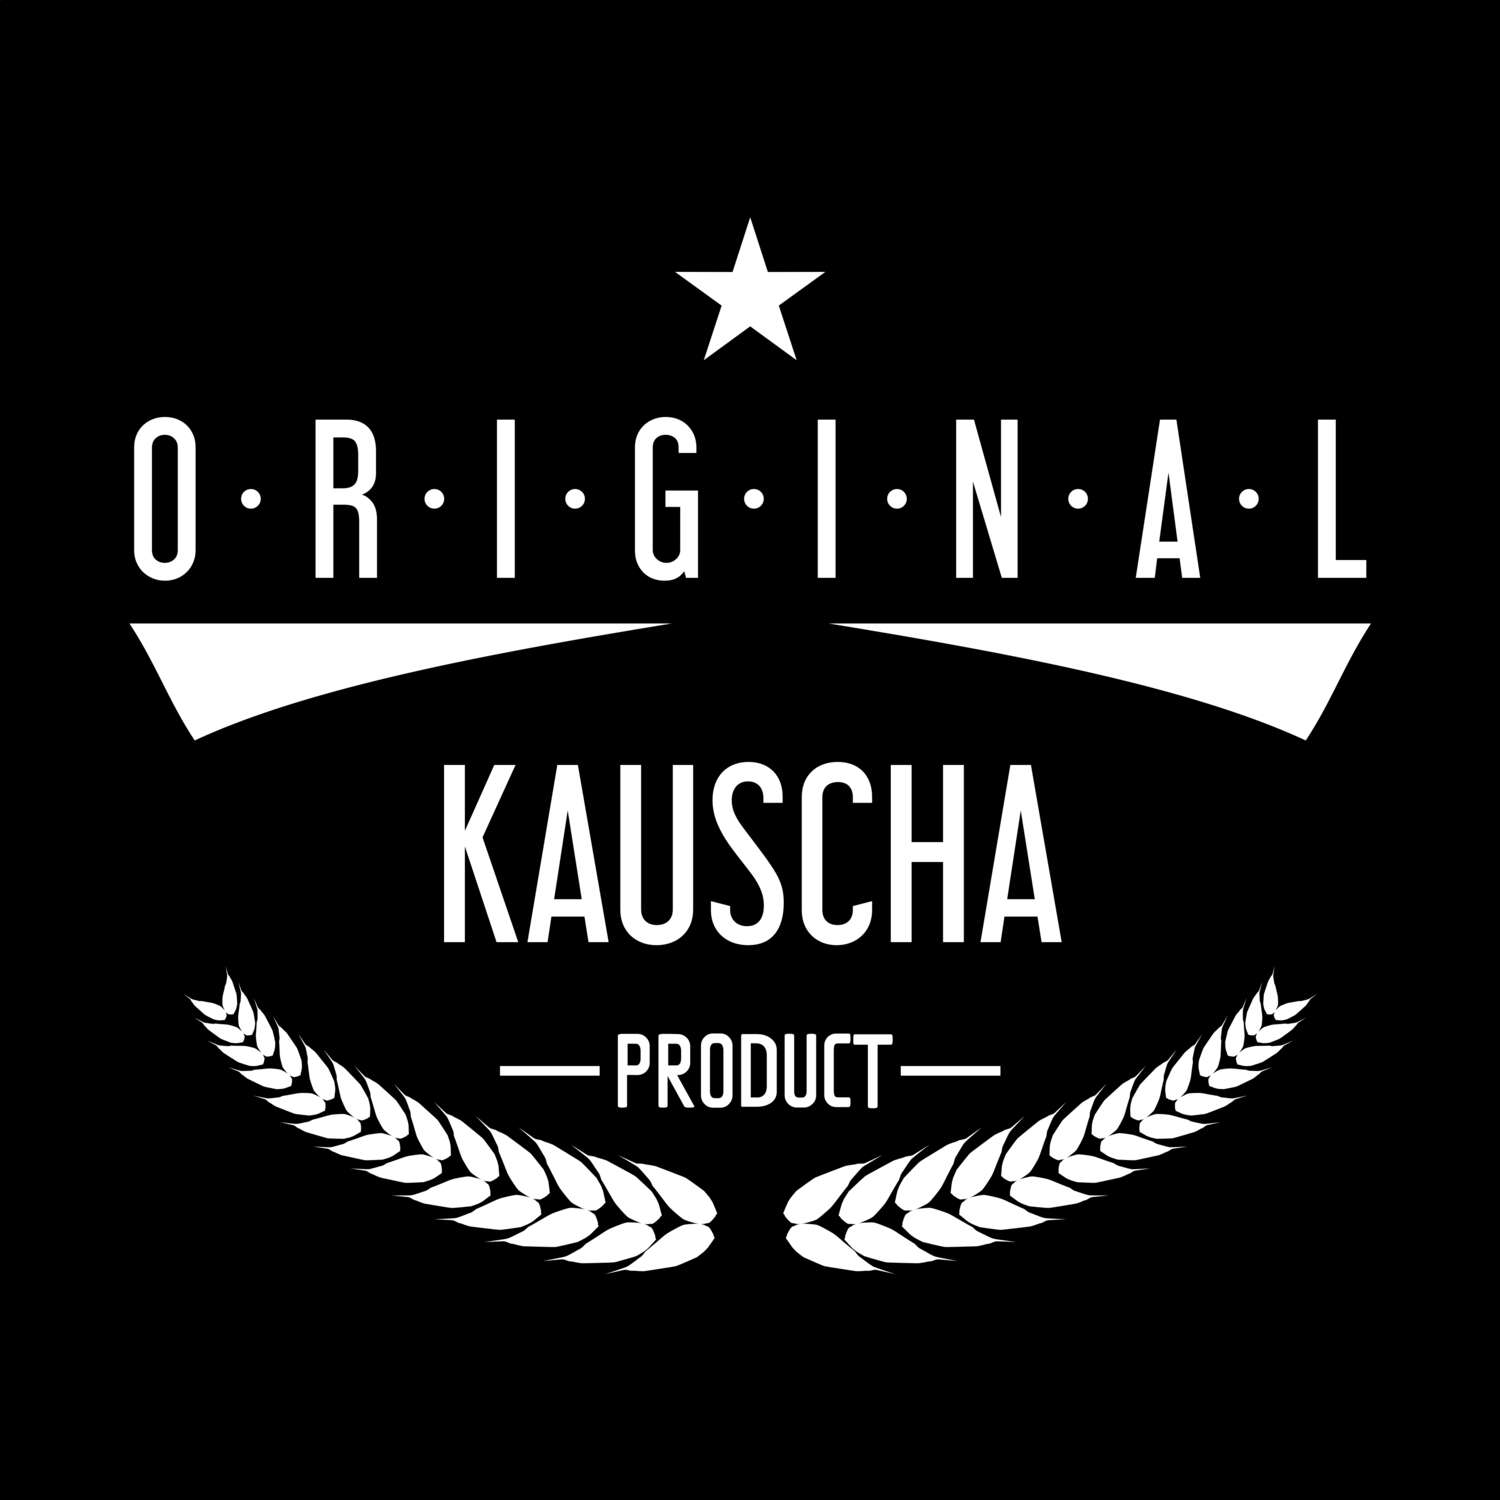 Kauscha T-Shirt »Original Product«